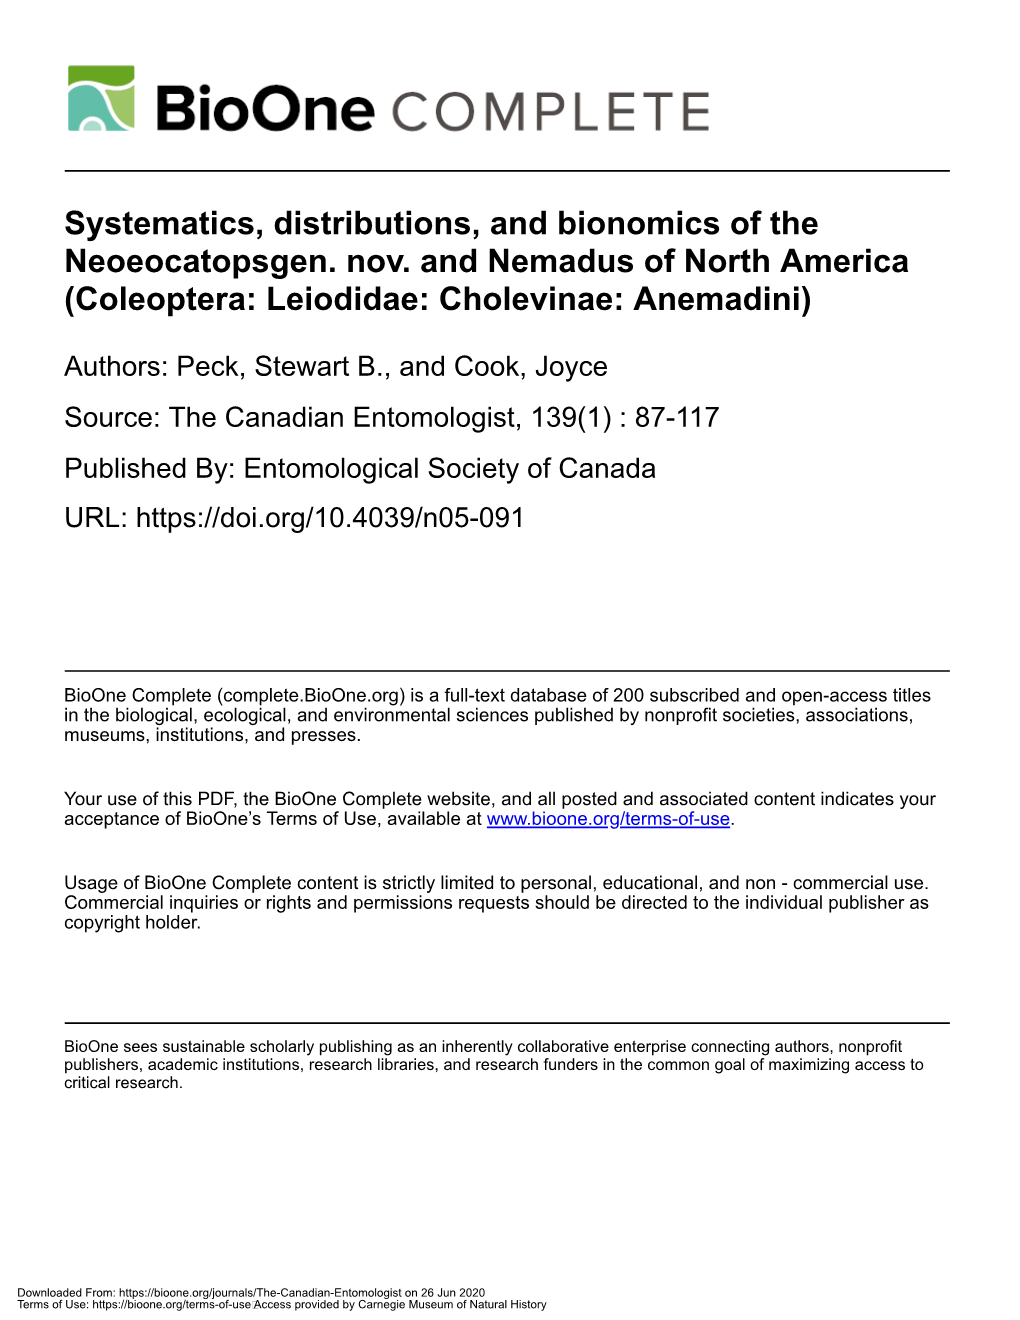 Systematics, Distributions, and Bionomics of the Neoeocatopsgen. Nov. and Nemadus of North America (Coleoptera: Leiodidae: Cholevinae: Anemadini)